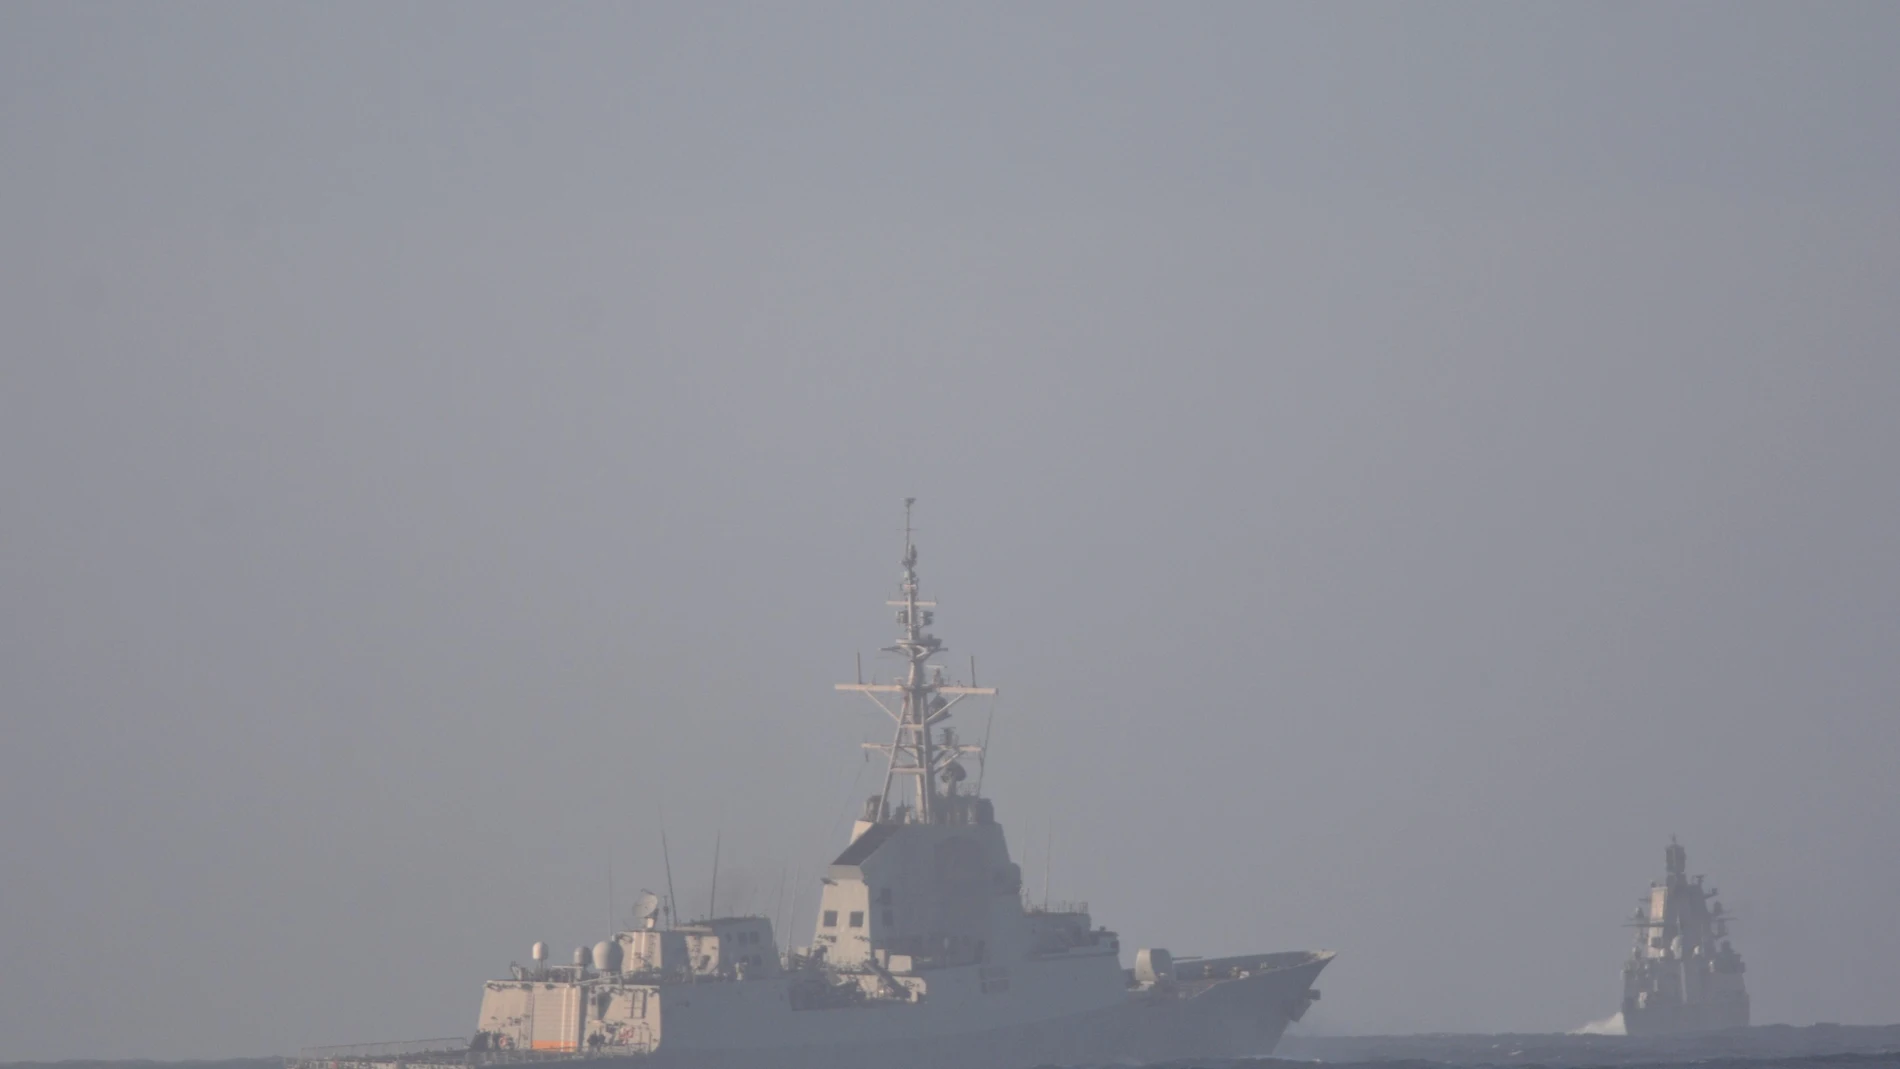 La fragata "Méndez Núñez" navega tras el buque ruso "Admiral Gorshkov"